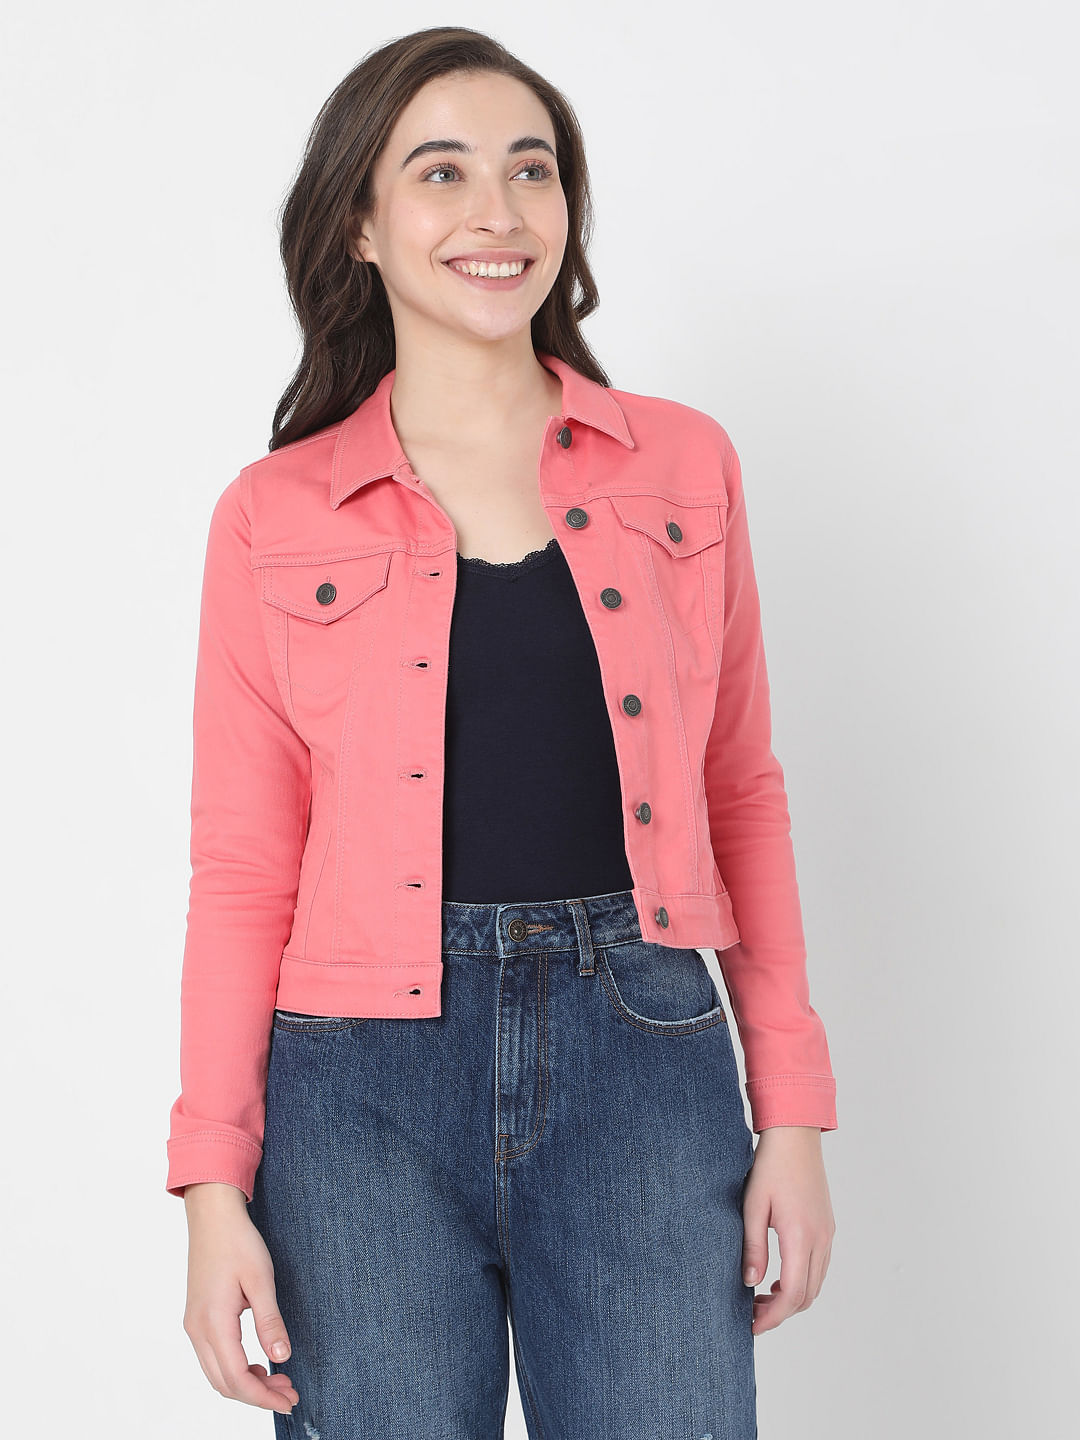 Buy DenimBird Full Sleeve Solid Women Jacket PINK M at Amazonin